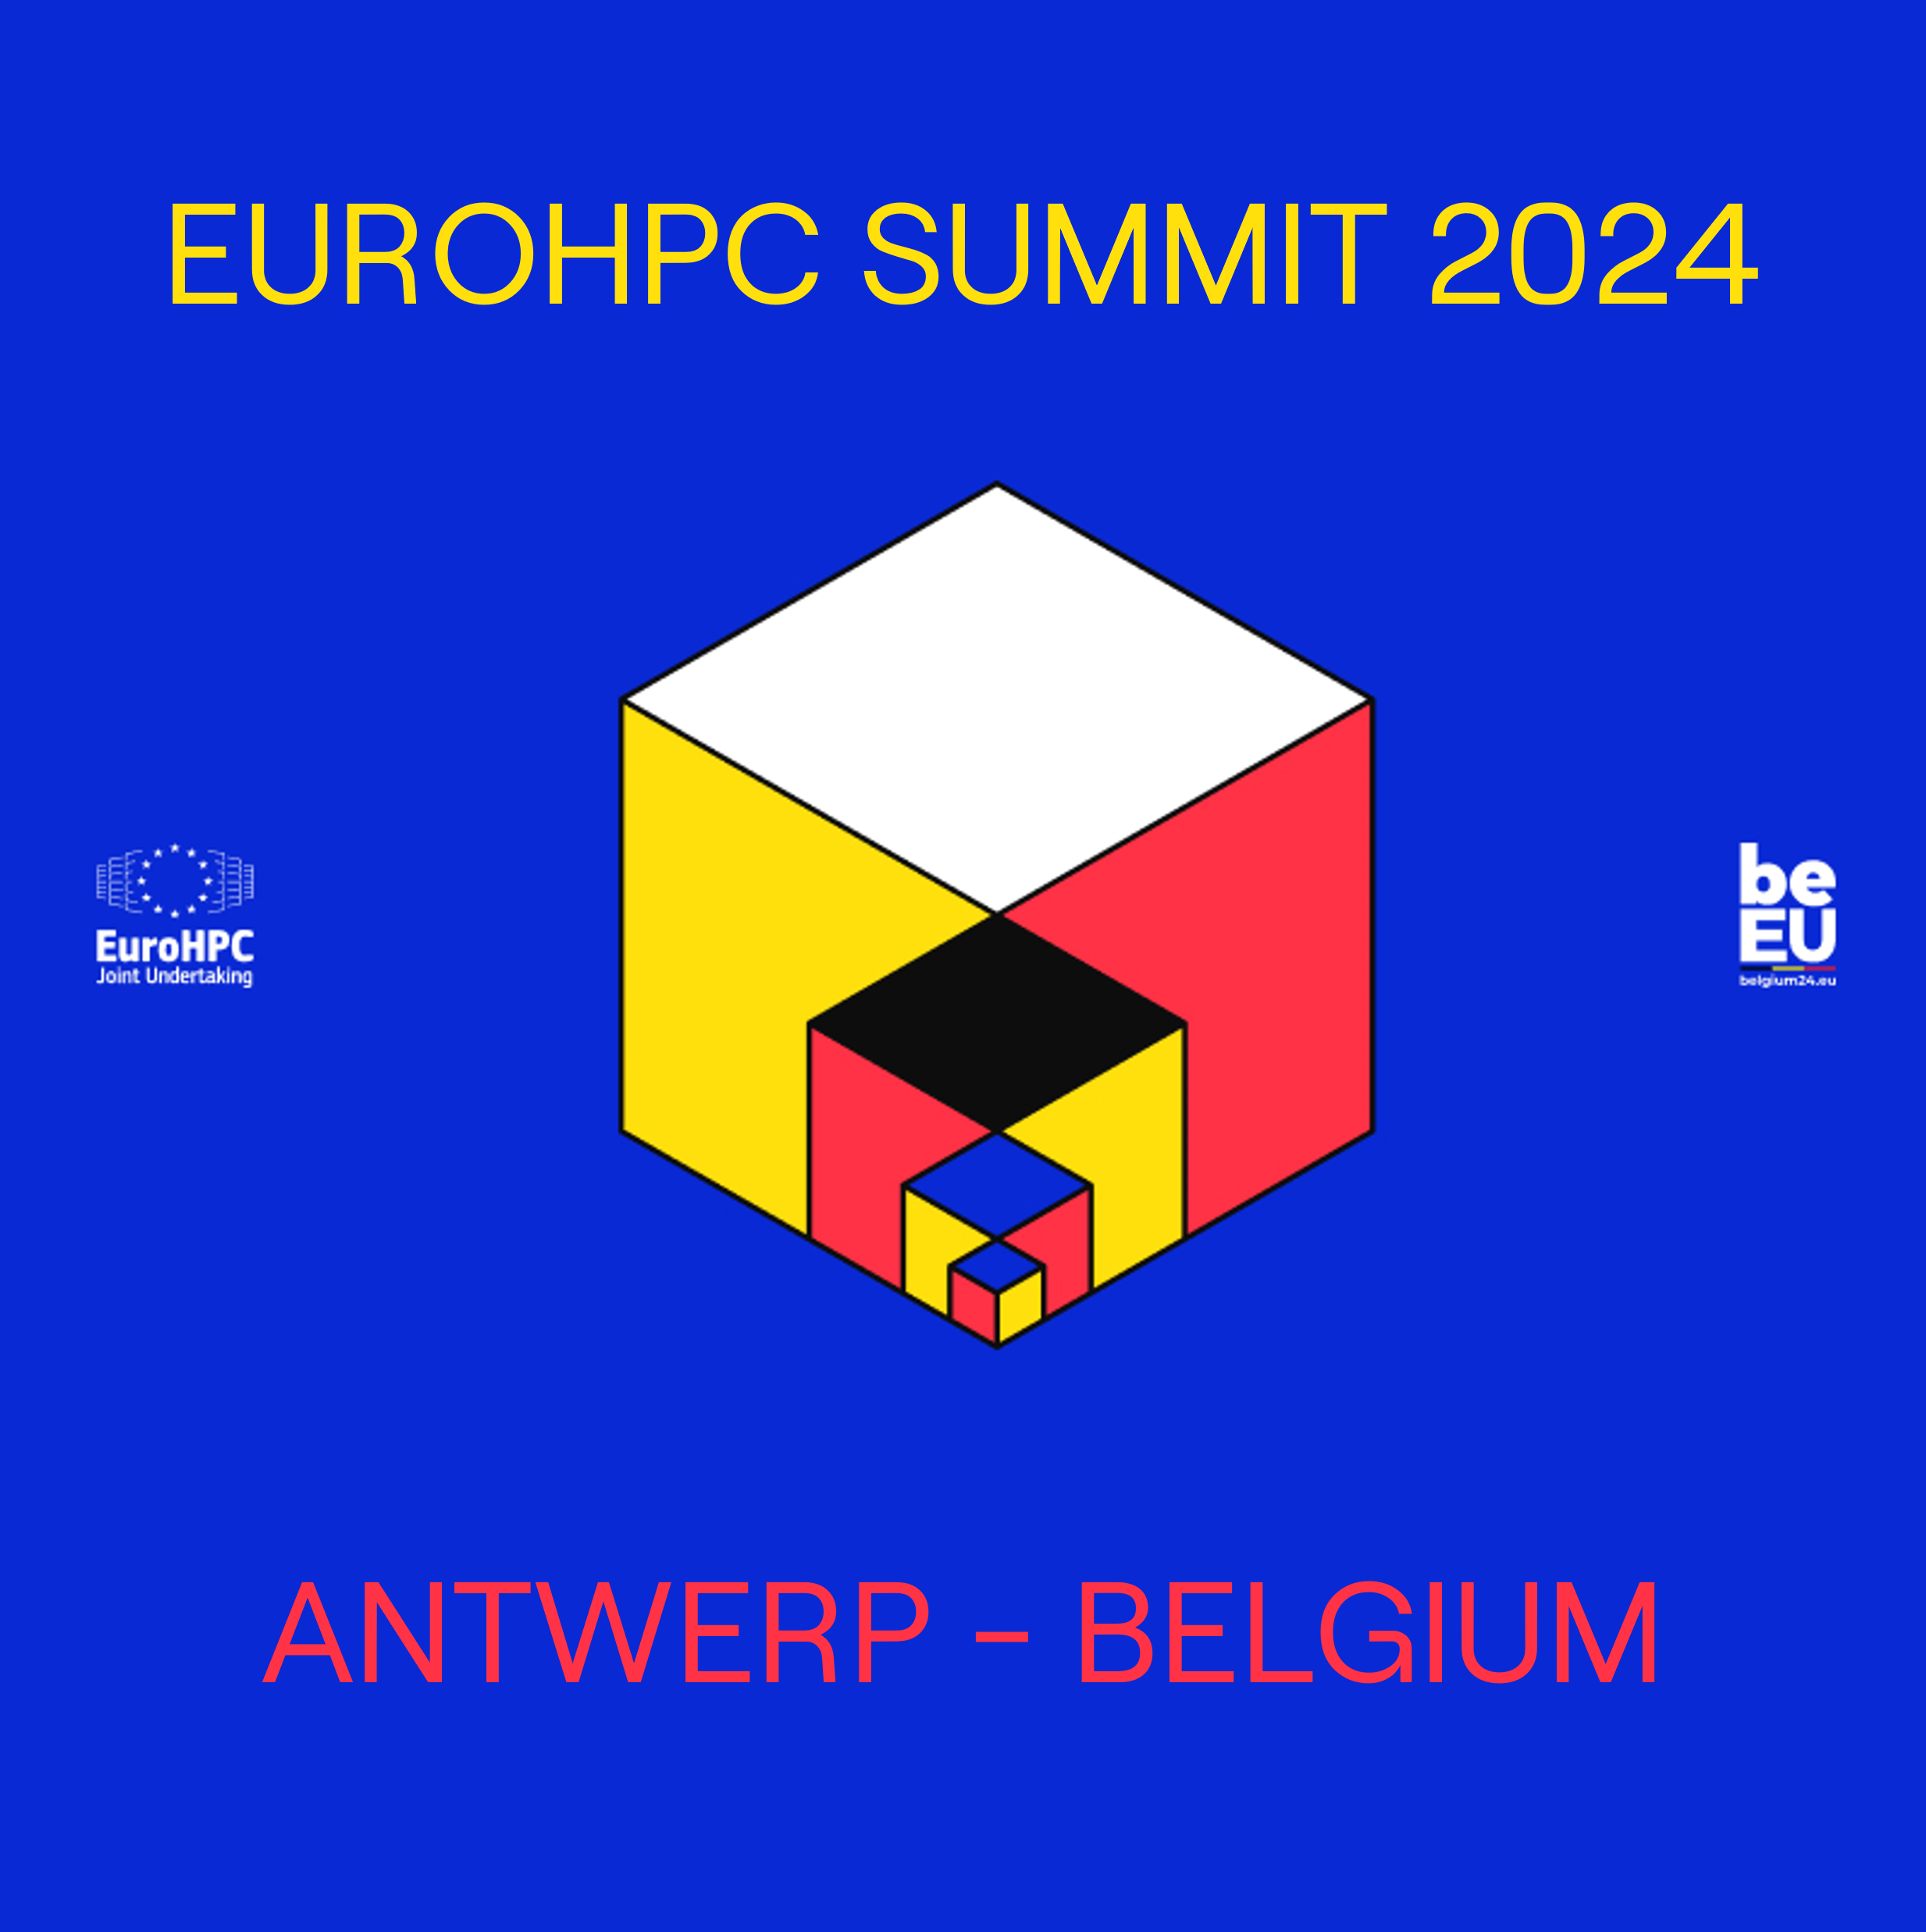 the summit logo on a blue background, alongside the eurohpc logo and the belgian presidency logo.